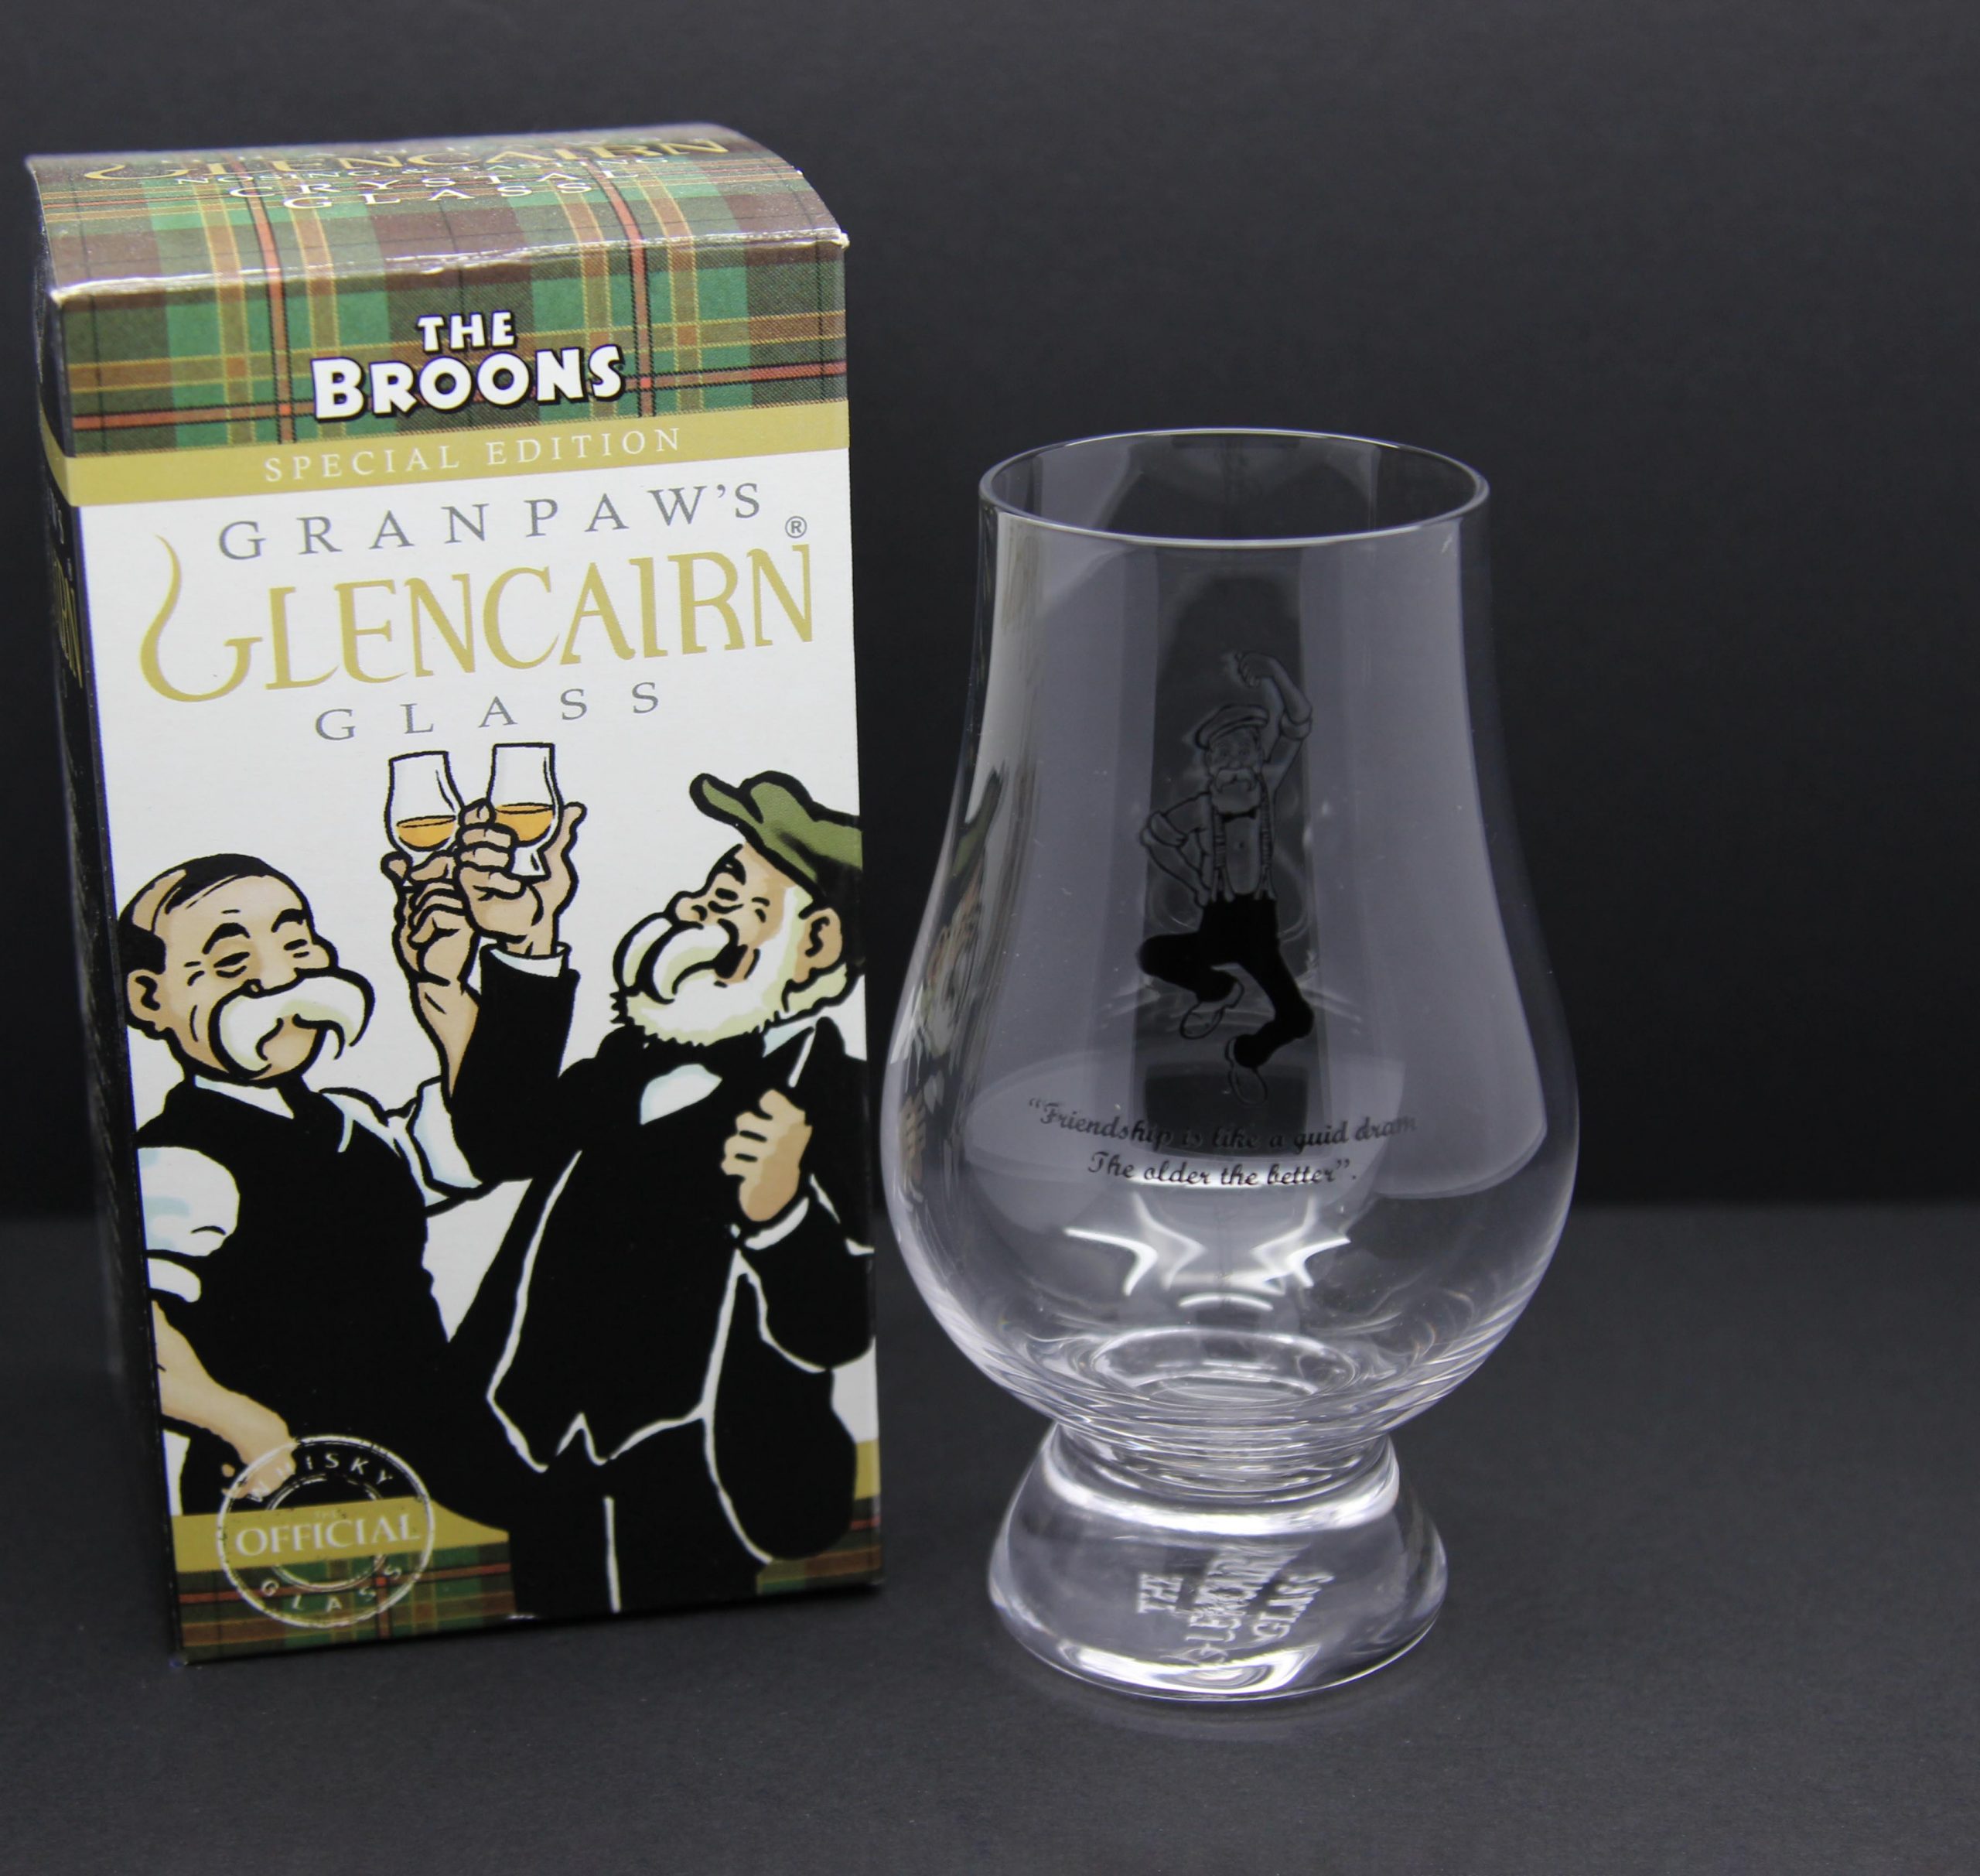 The Broons Glencairn Glass Granpaw